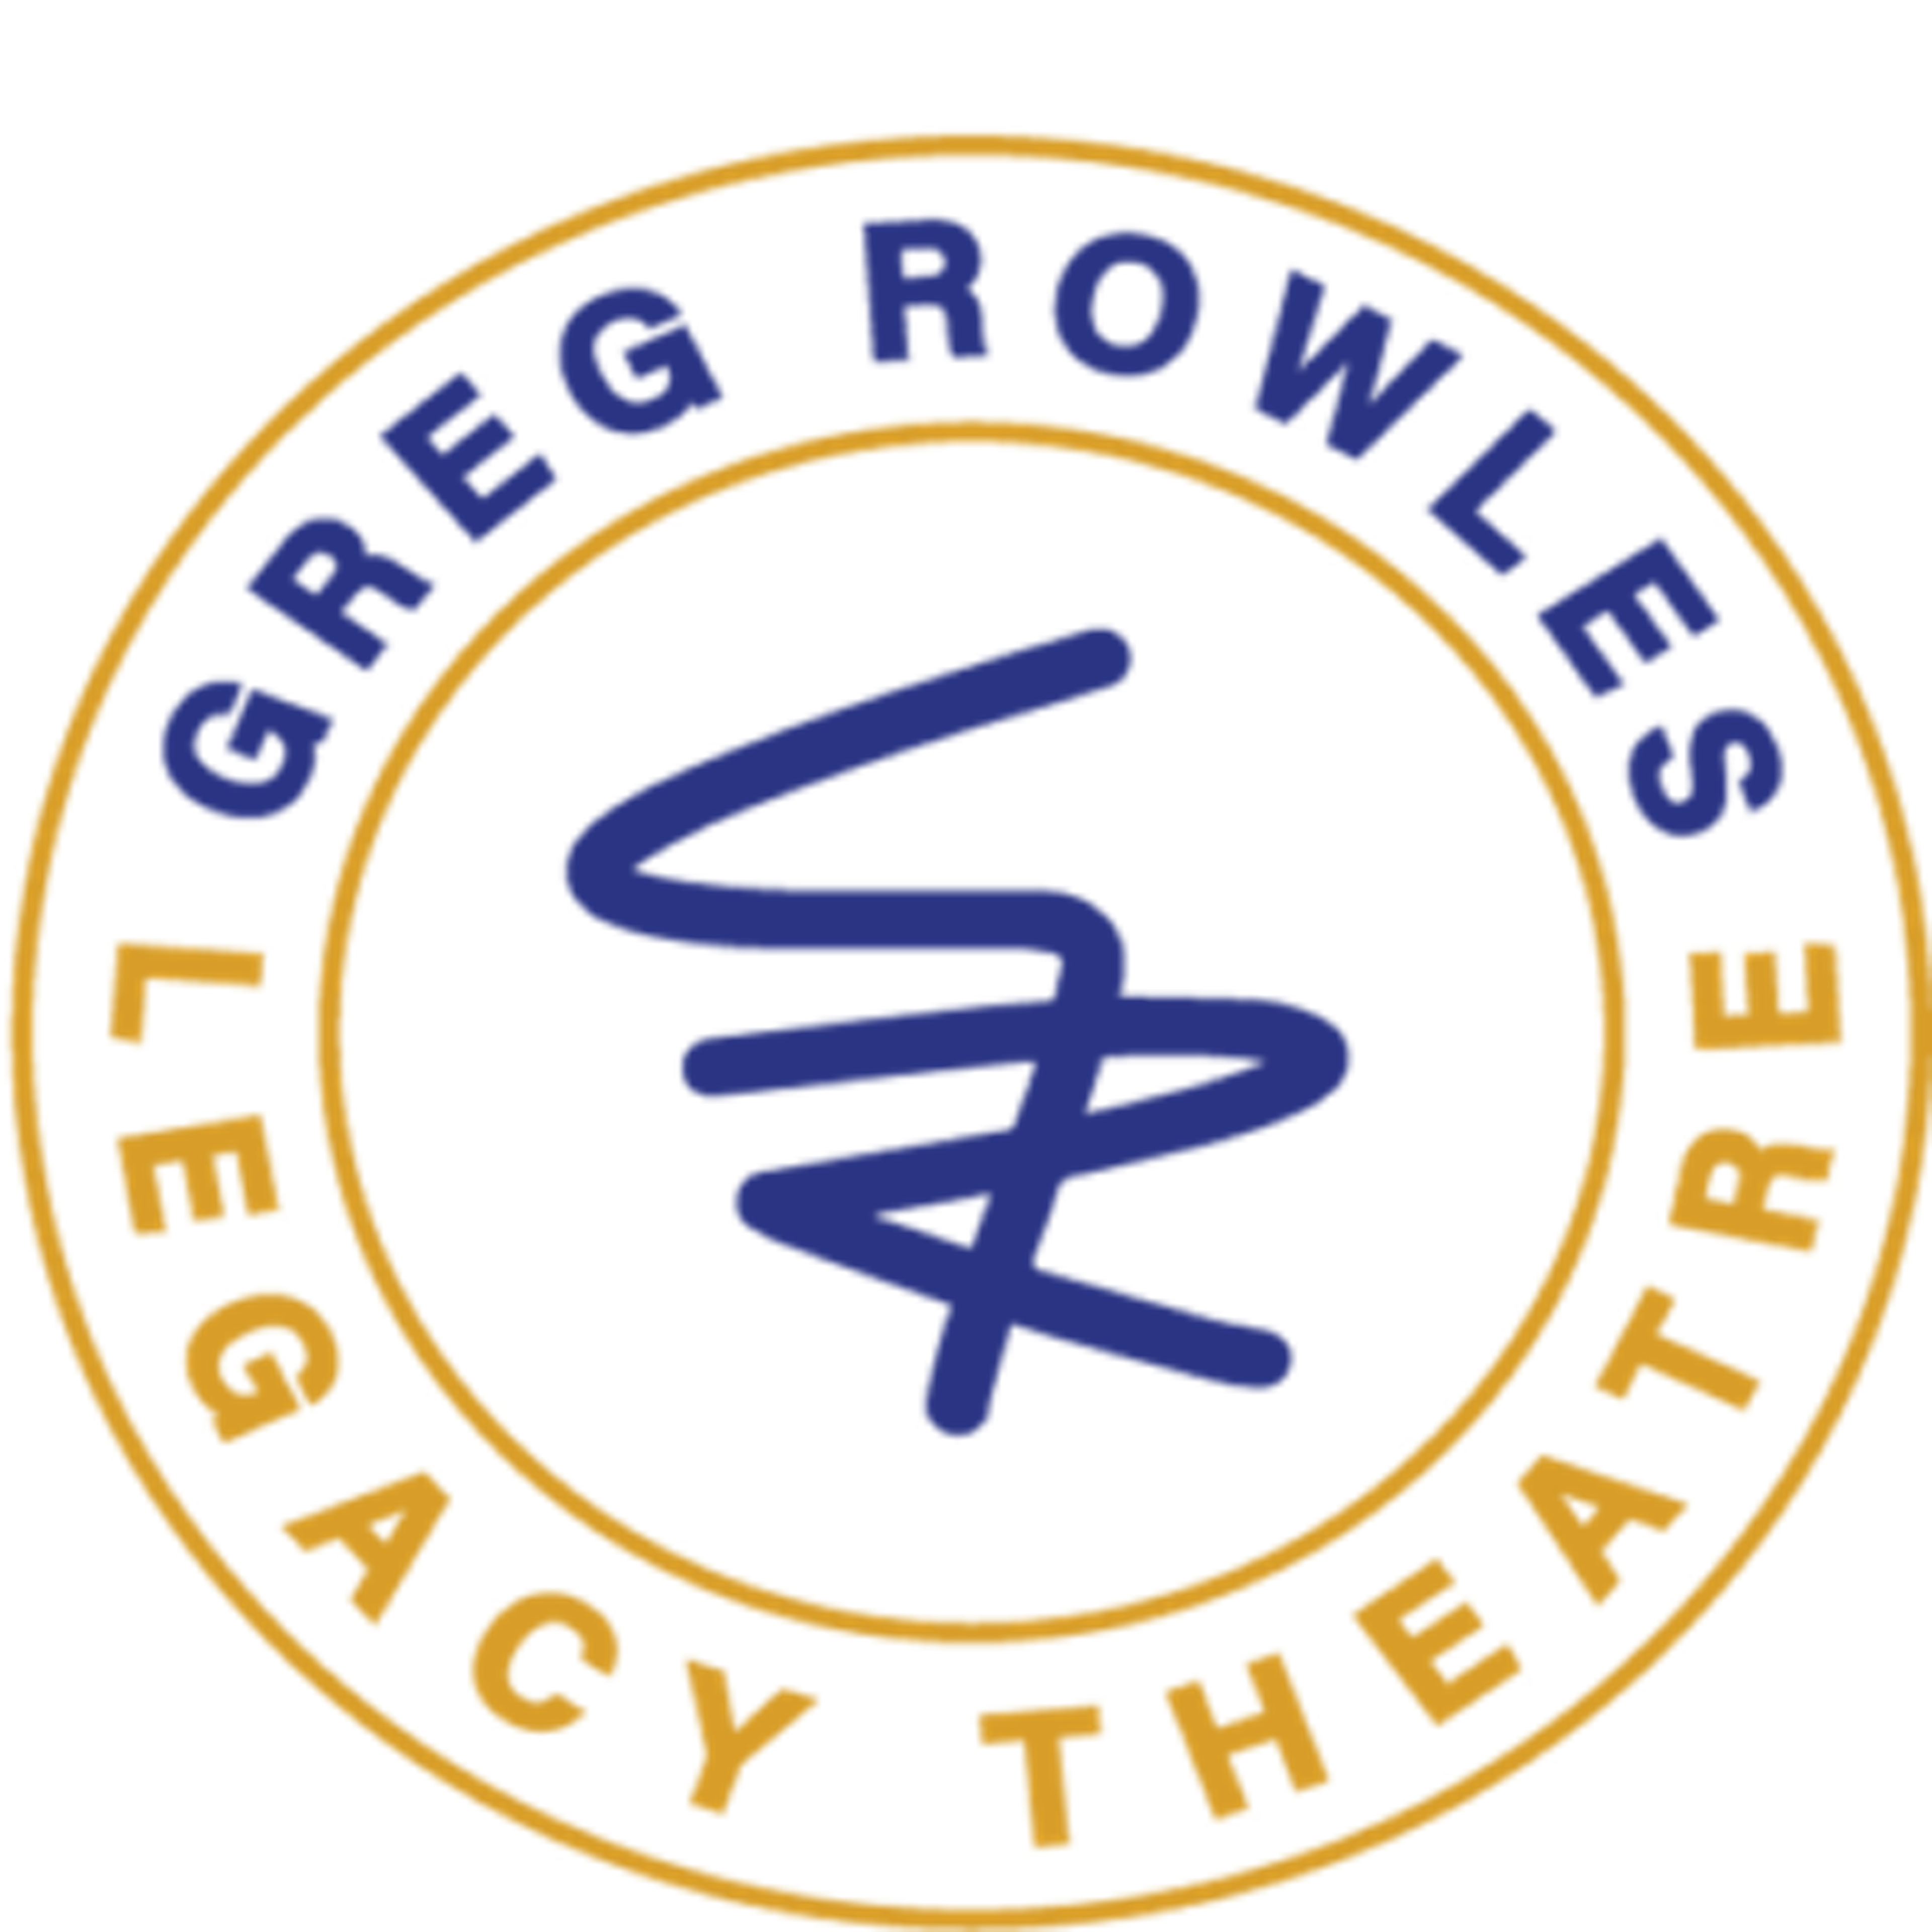 Greg Rowles Legacy Theatre